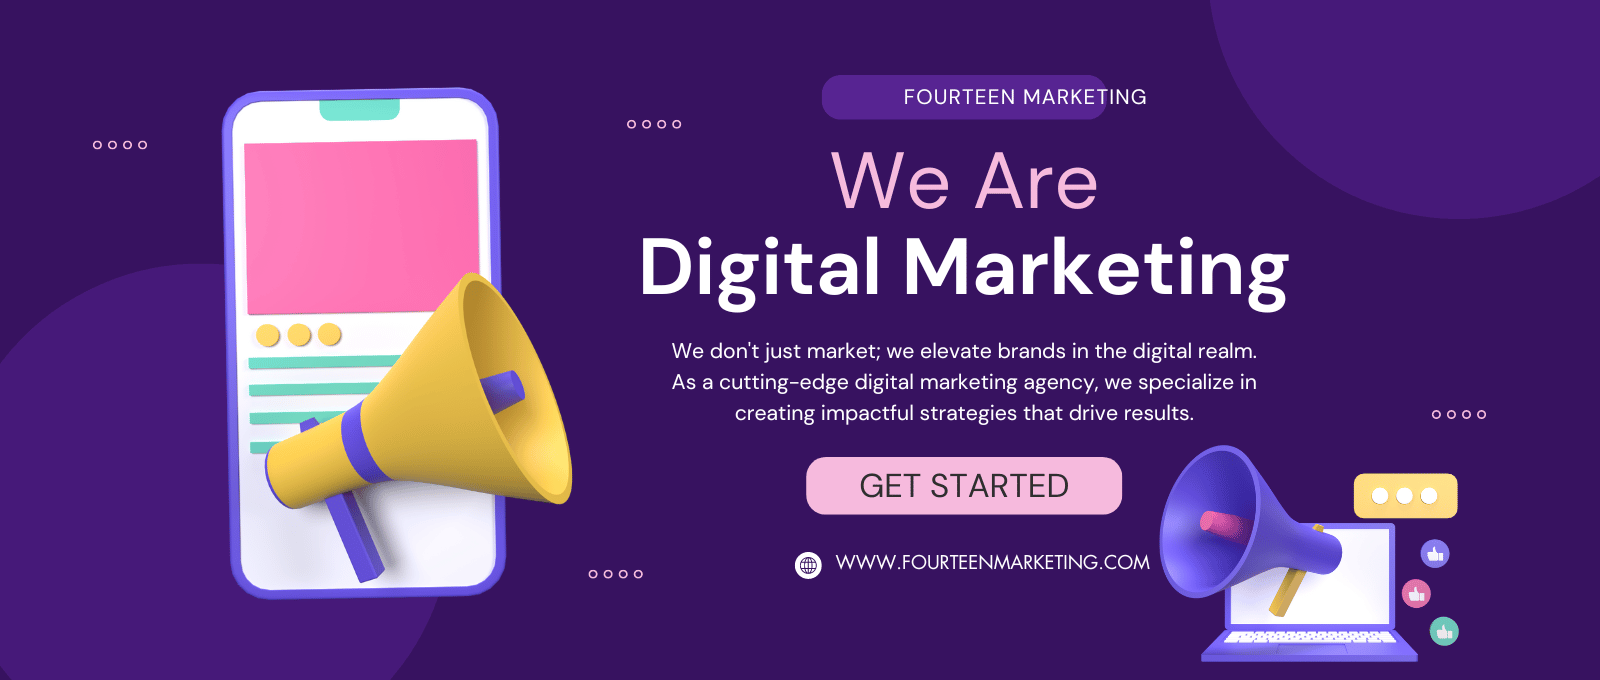 Purple and Pink 3D Illustrative Modern Digital Marketing Agency Banner (1600 x 680 px)